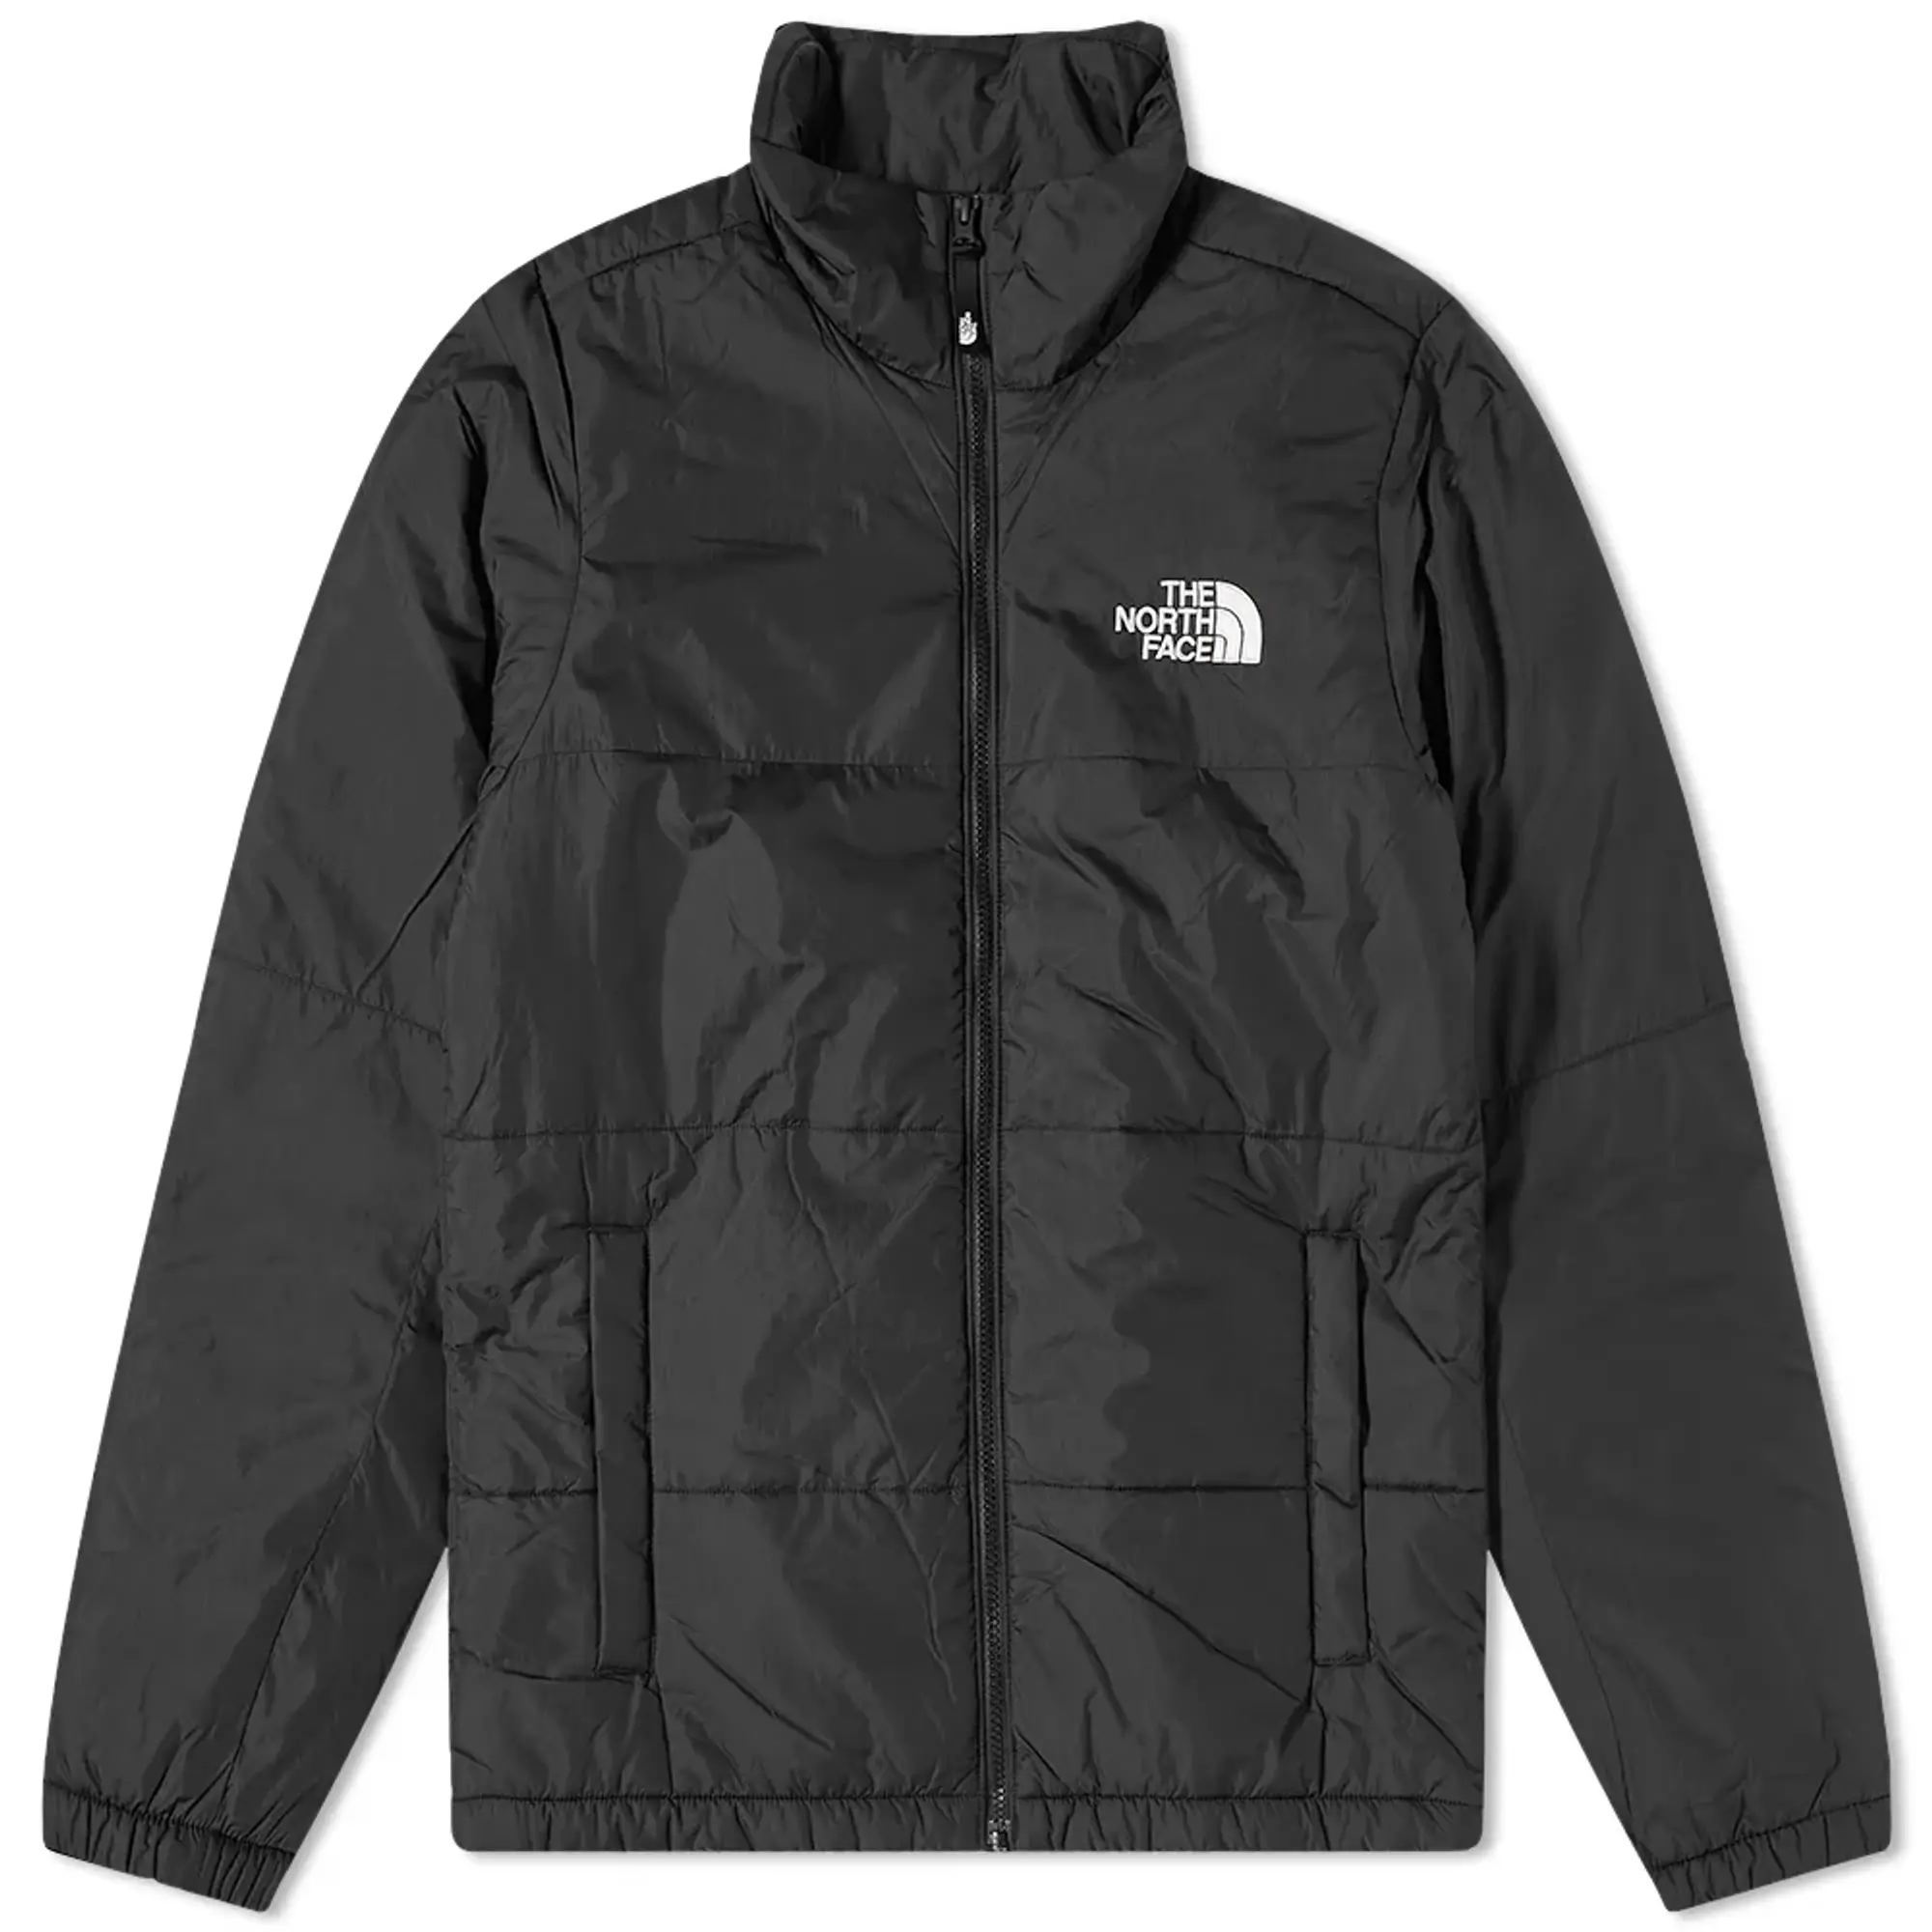 The North Face Men's Gosei Puffer Jacket Black